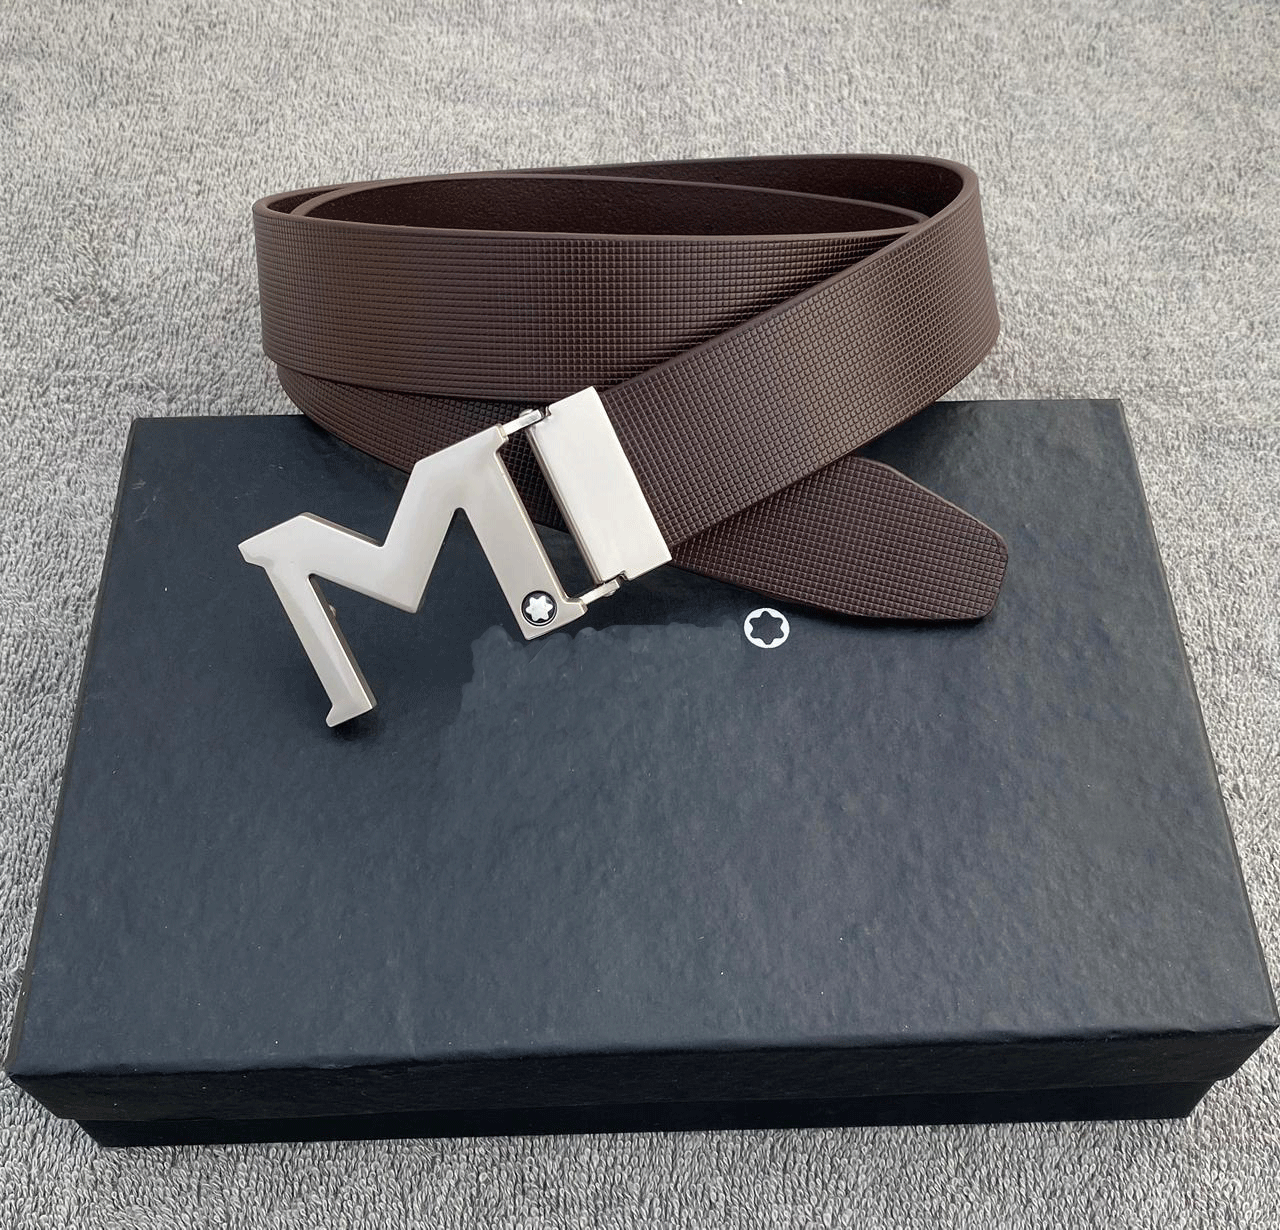 M Latter Leather Strap Designer Belts For Men's -Unique and Classy